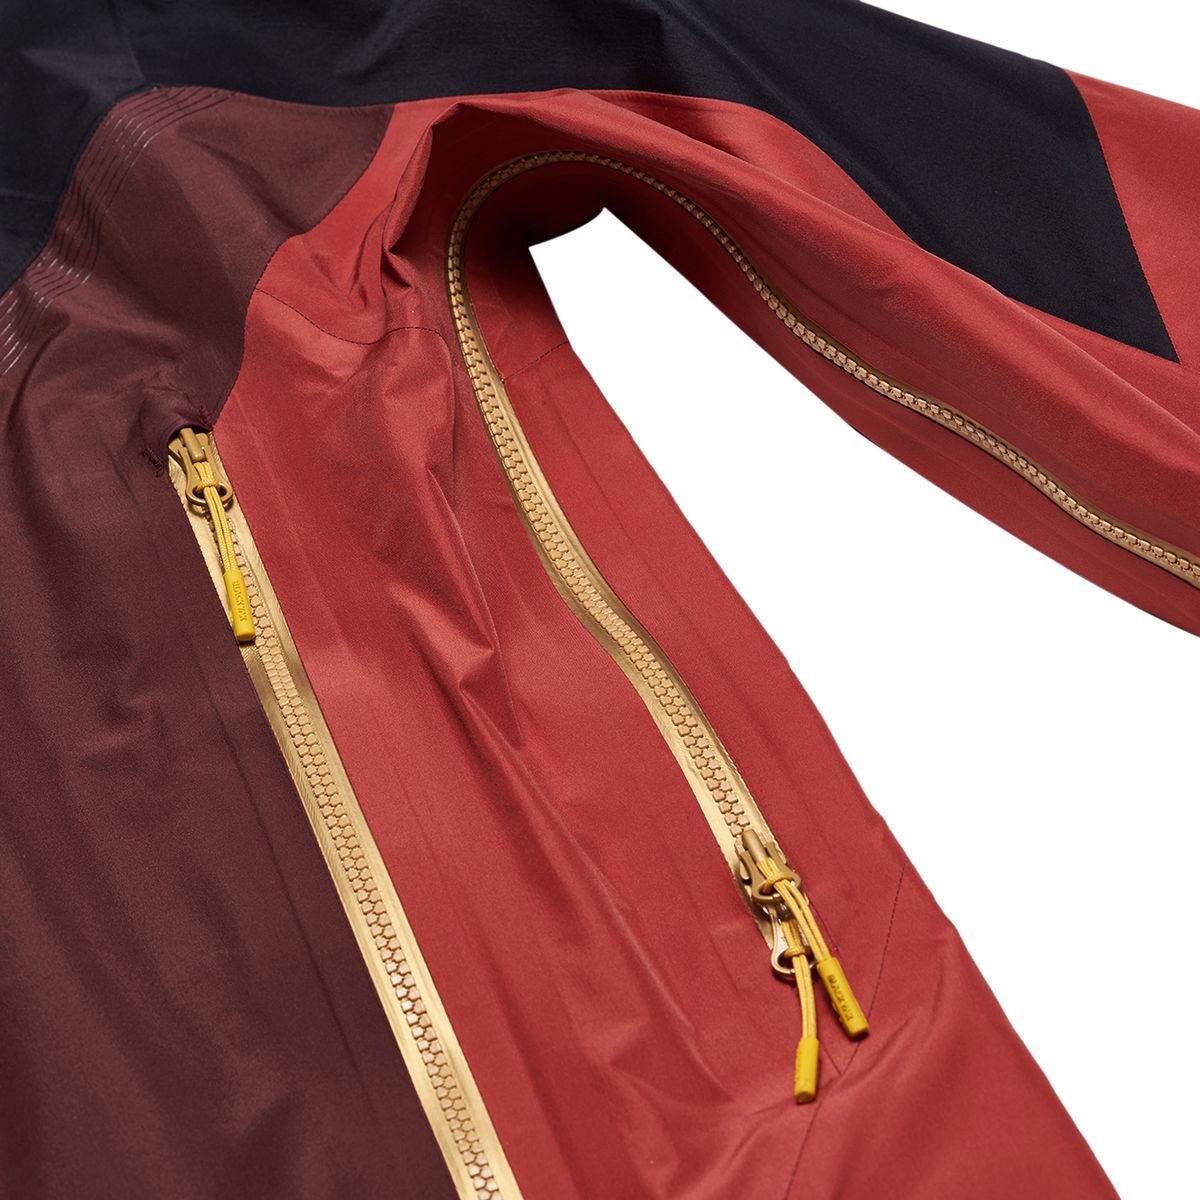 Black Yak GORE-TEX Pro Shell 3L Jacket - Chaqueta impermeable Hombre, Comprar online